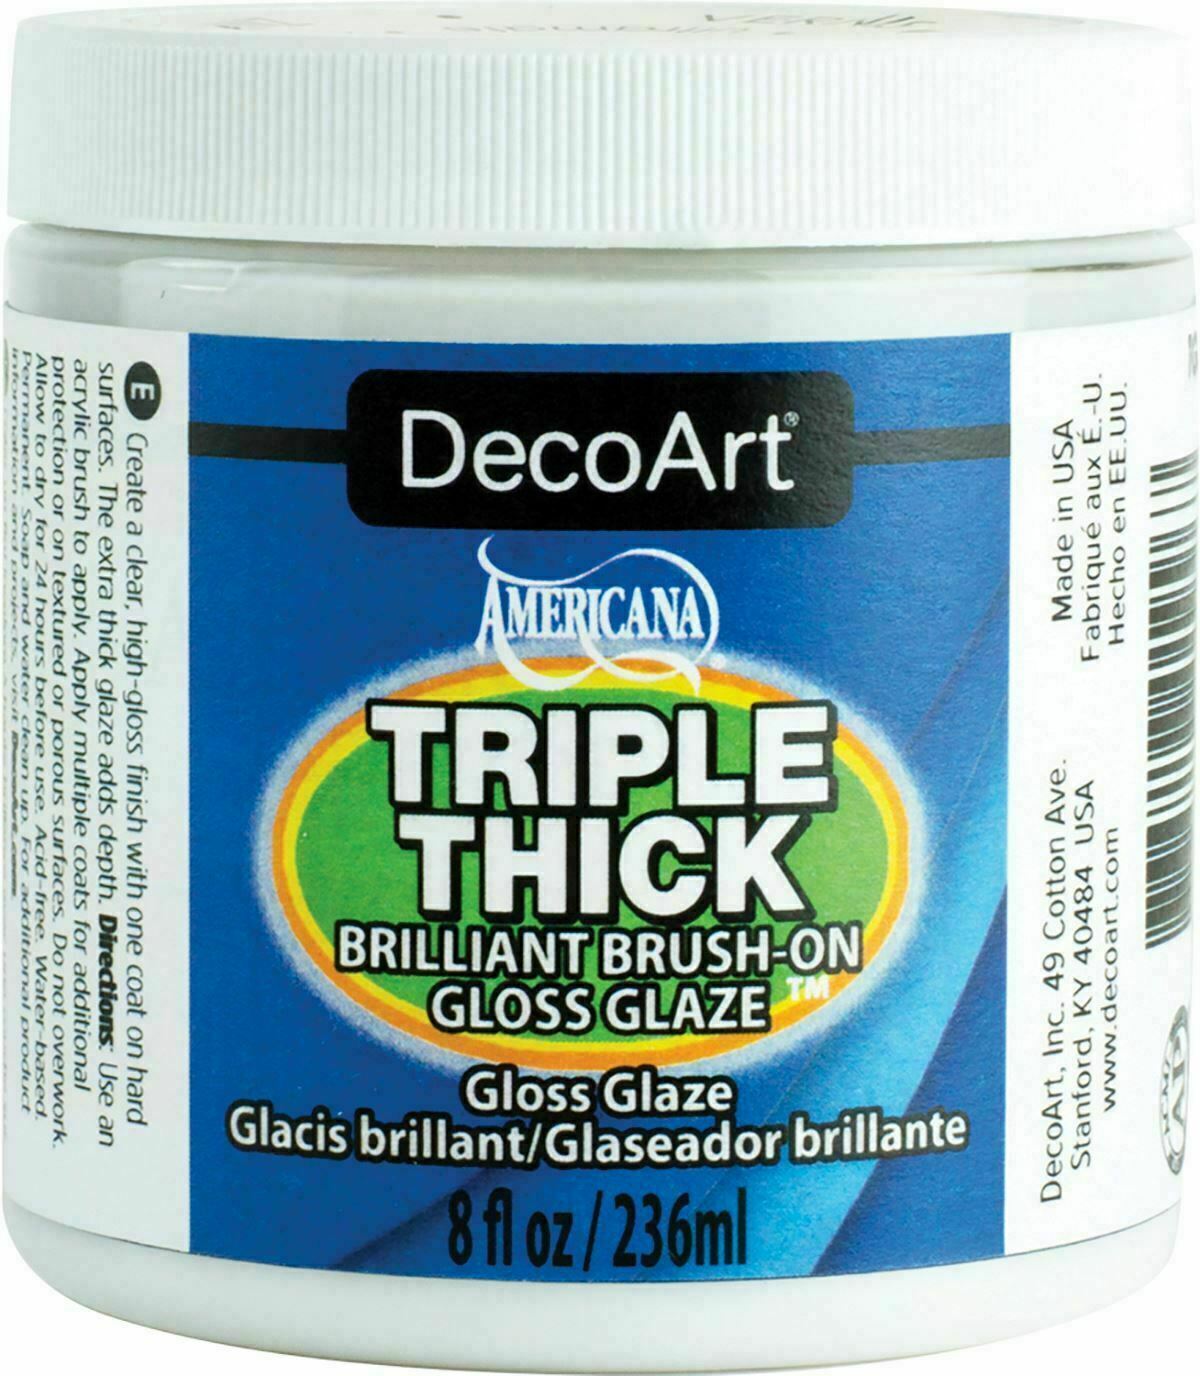 Decoart Triple Thick Gloss Glaze 8oz (づ｡◕‿‿◕｡)づ 236ml Jar